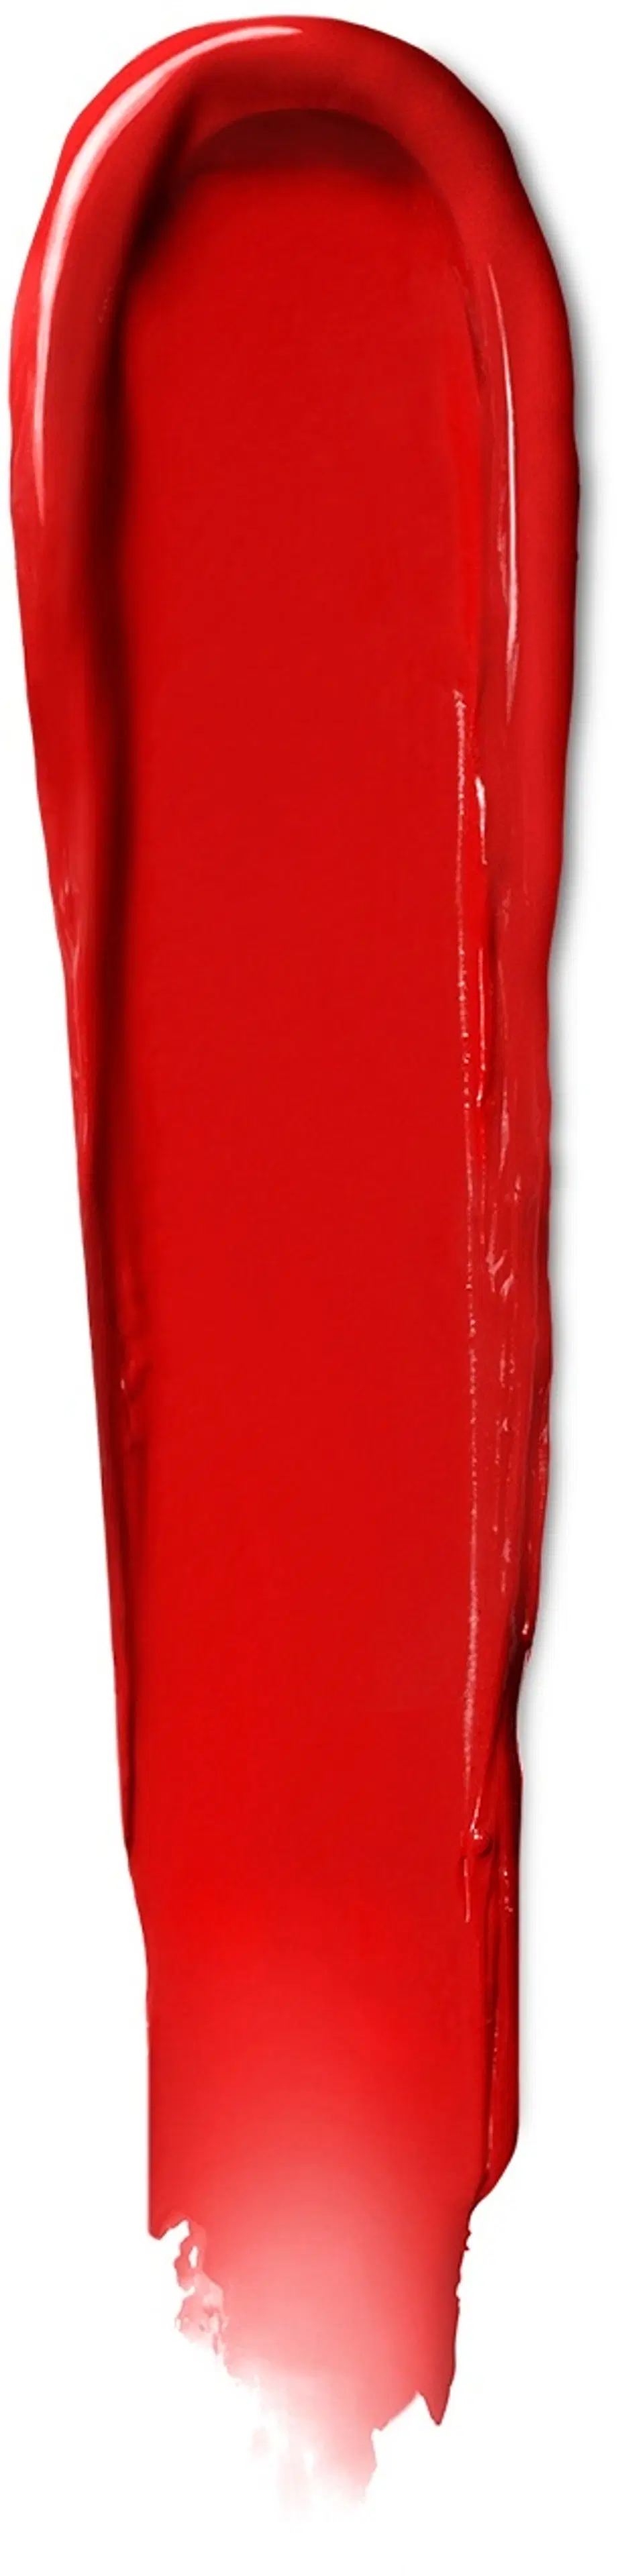 Clinique Pop Reds Lip Color + Cheek huulipuna 3,6 g